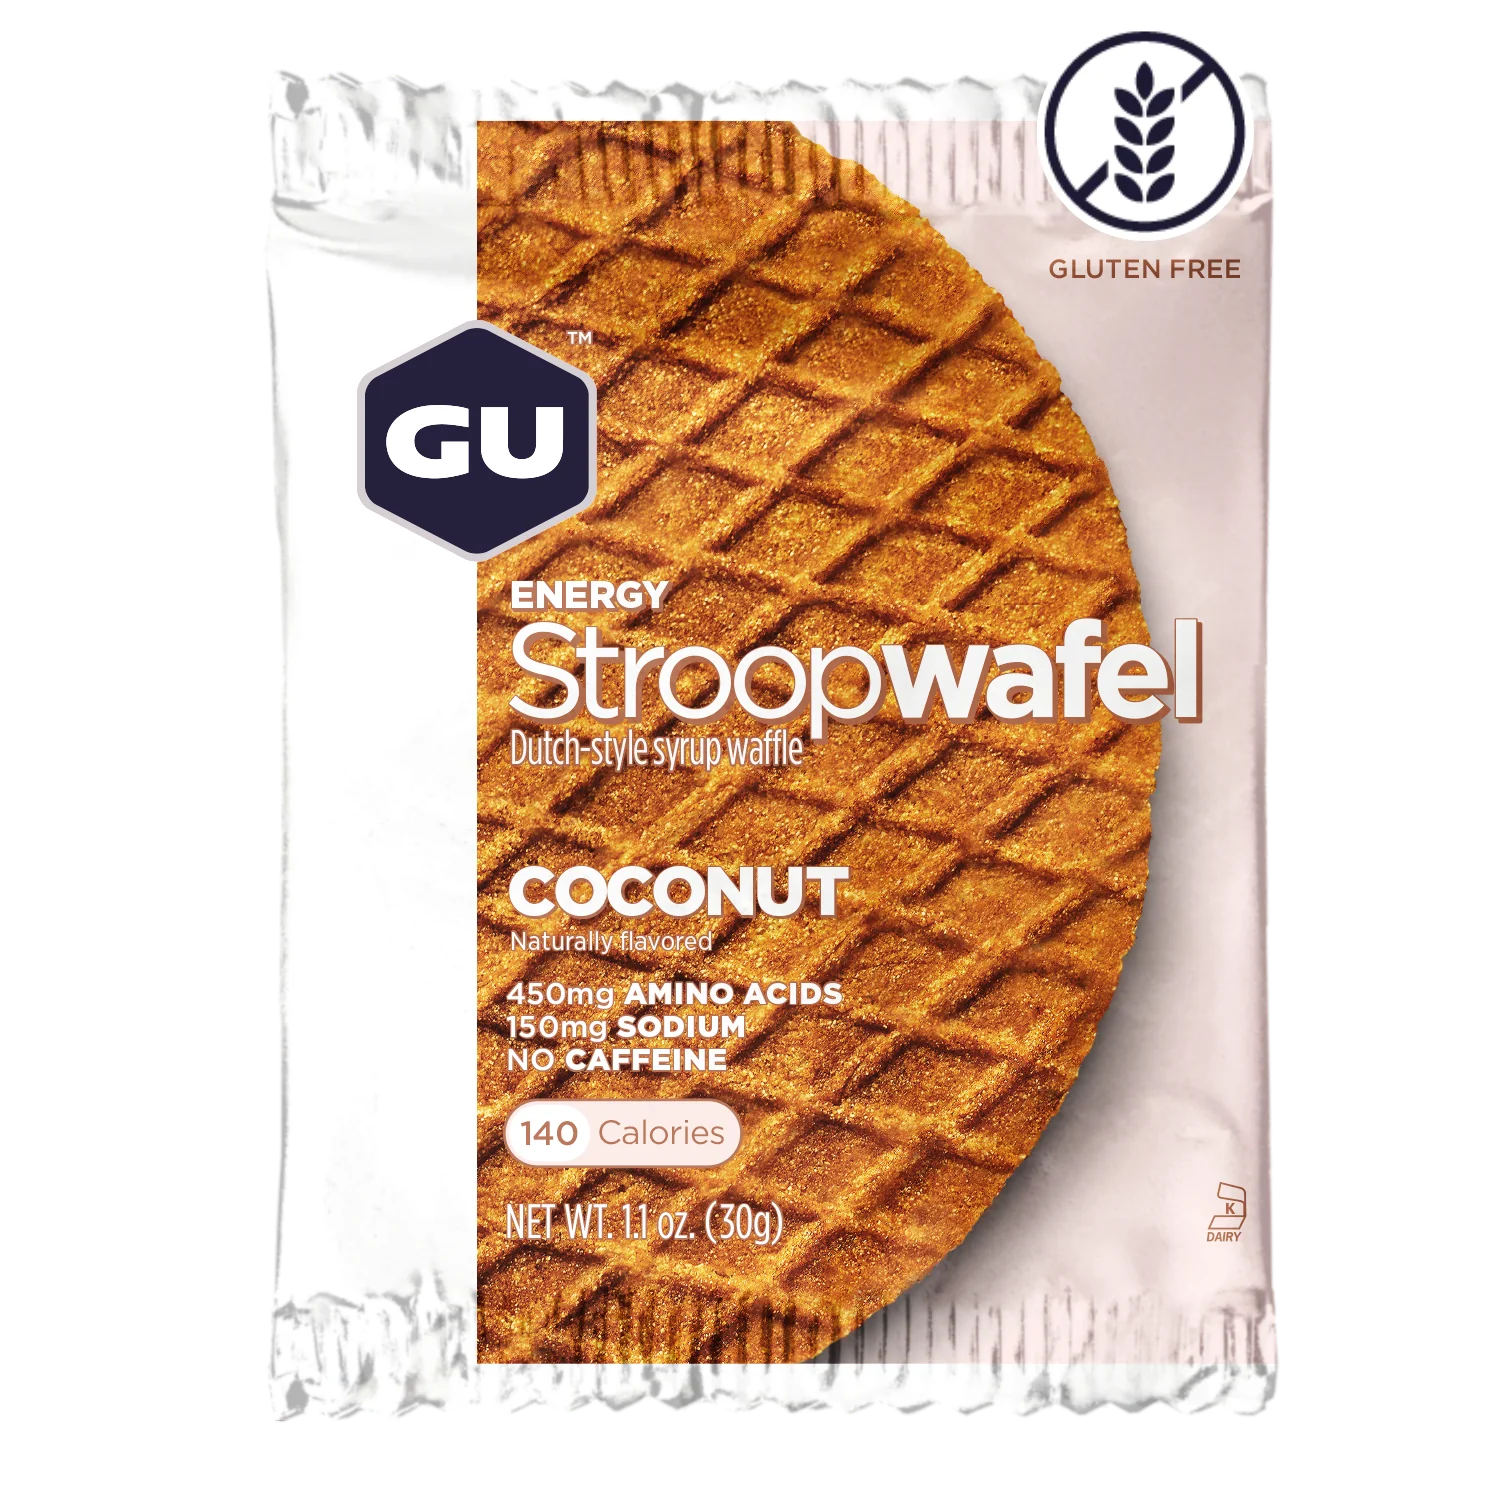 GU Stroopwafel - Coconut (4pk)